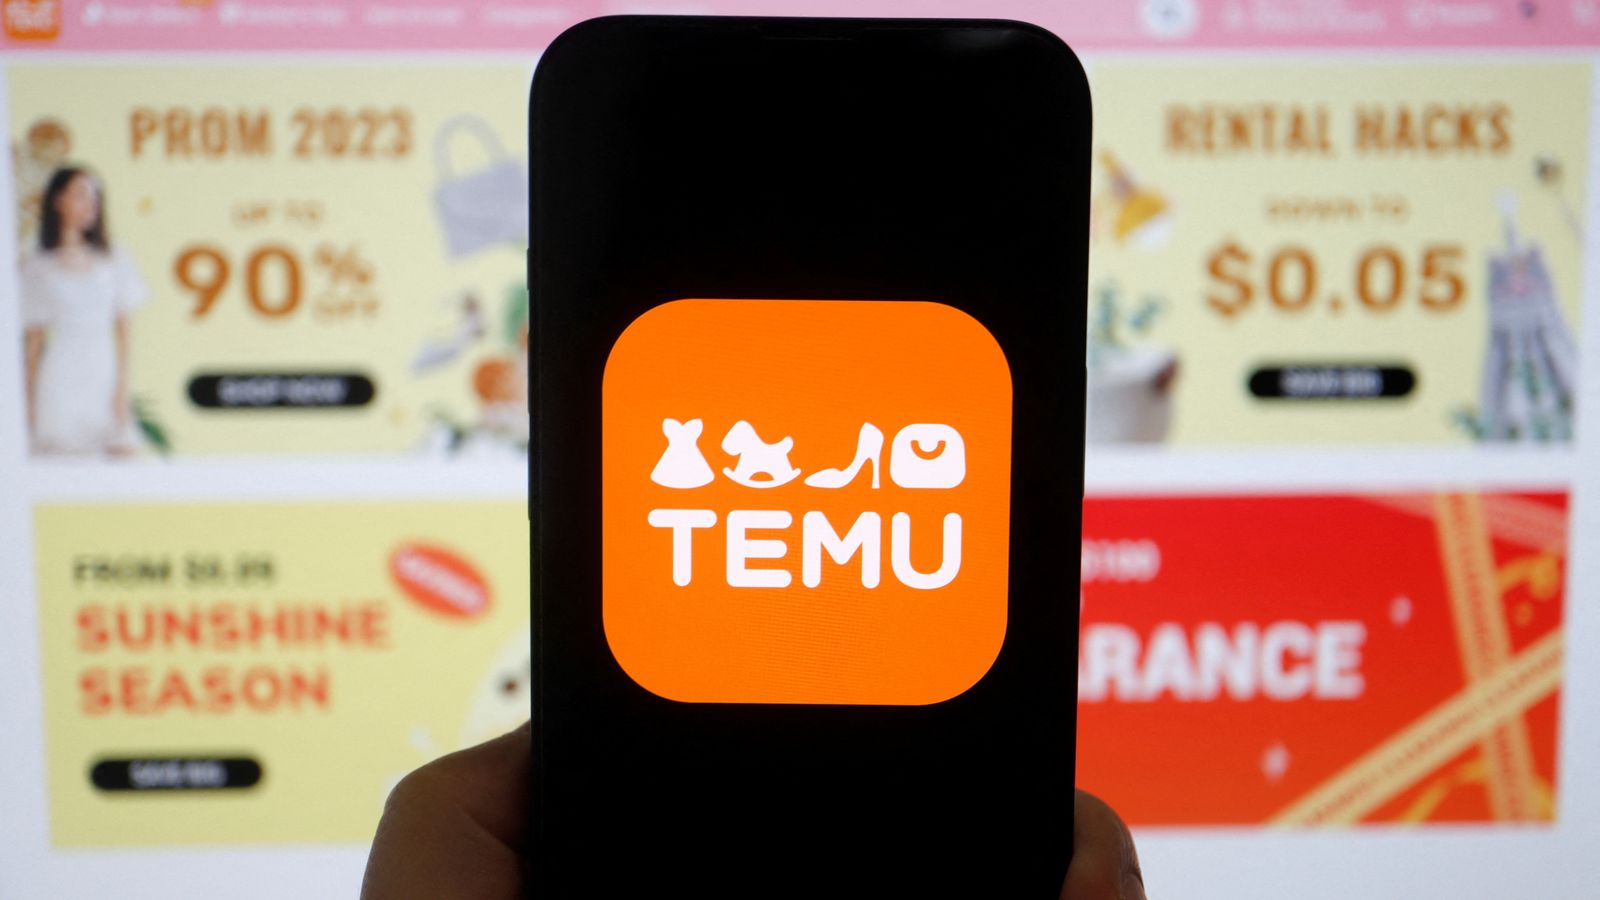 Temu faces legal challenge over 'manipulative practices'